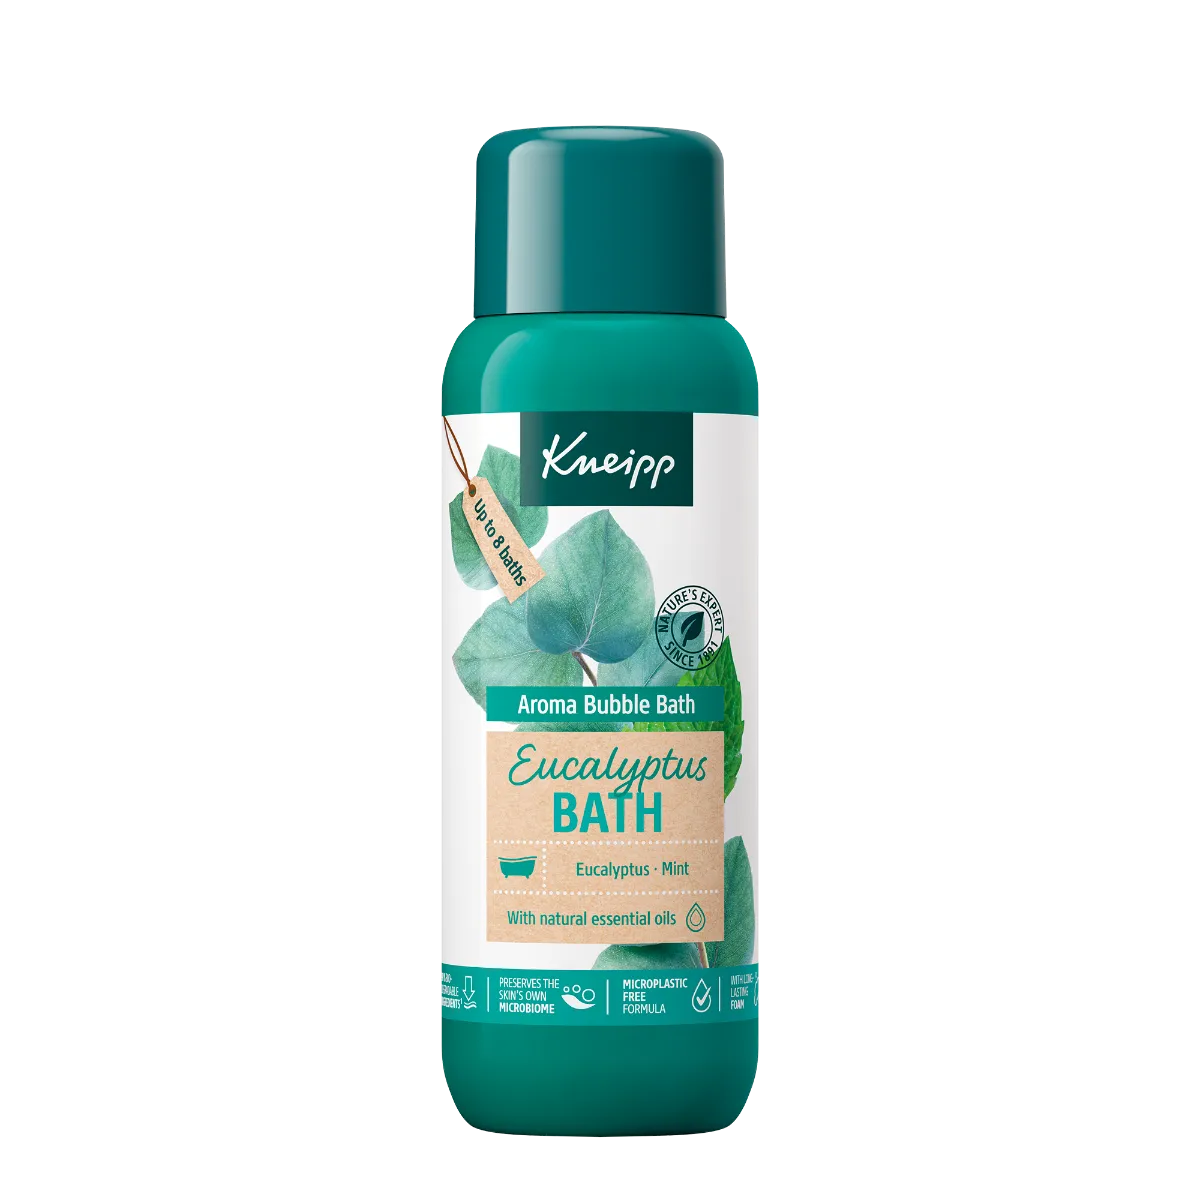 Kneipp Aroma Bubble Bath Eucalyptus Bath pianka do kąpieli eukaliptusowa, 400 ml 